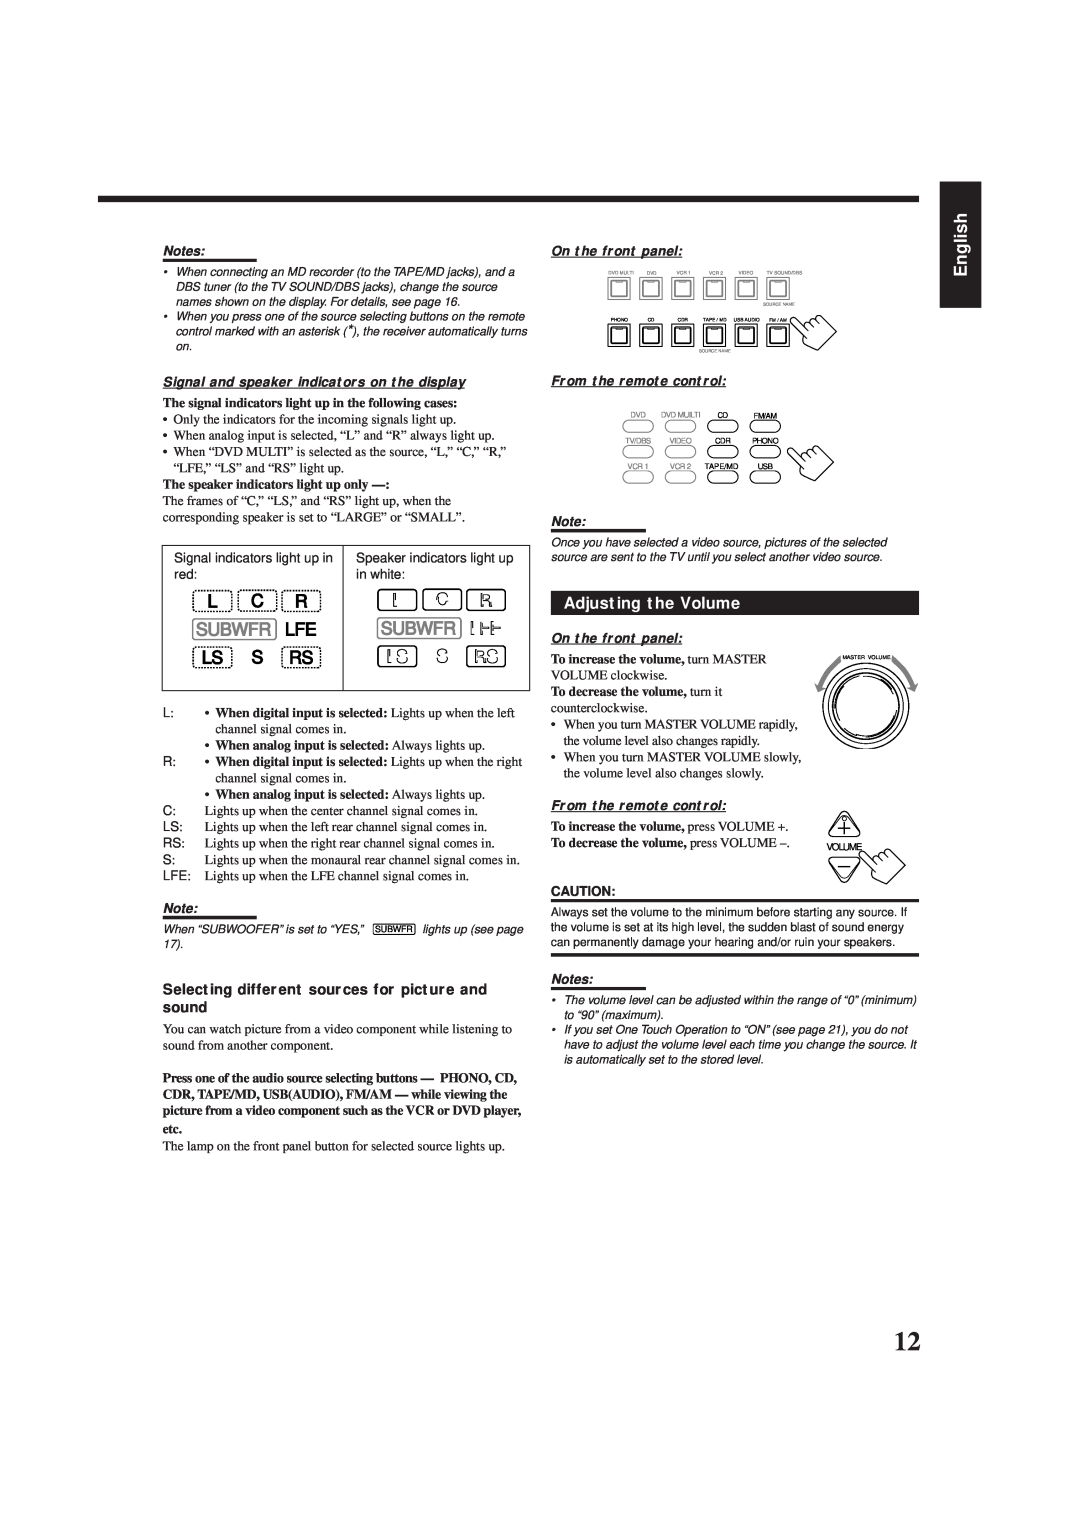 JVC RX-8012VSL manual English, Subwfr 